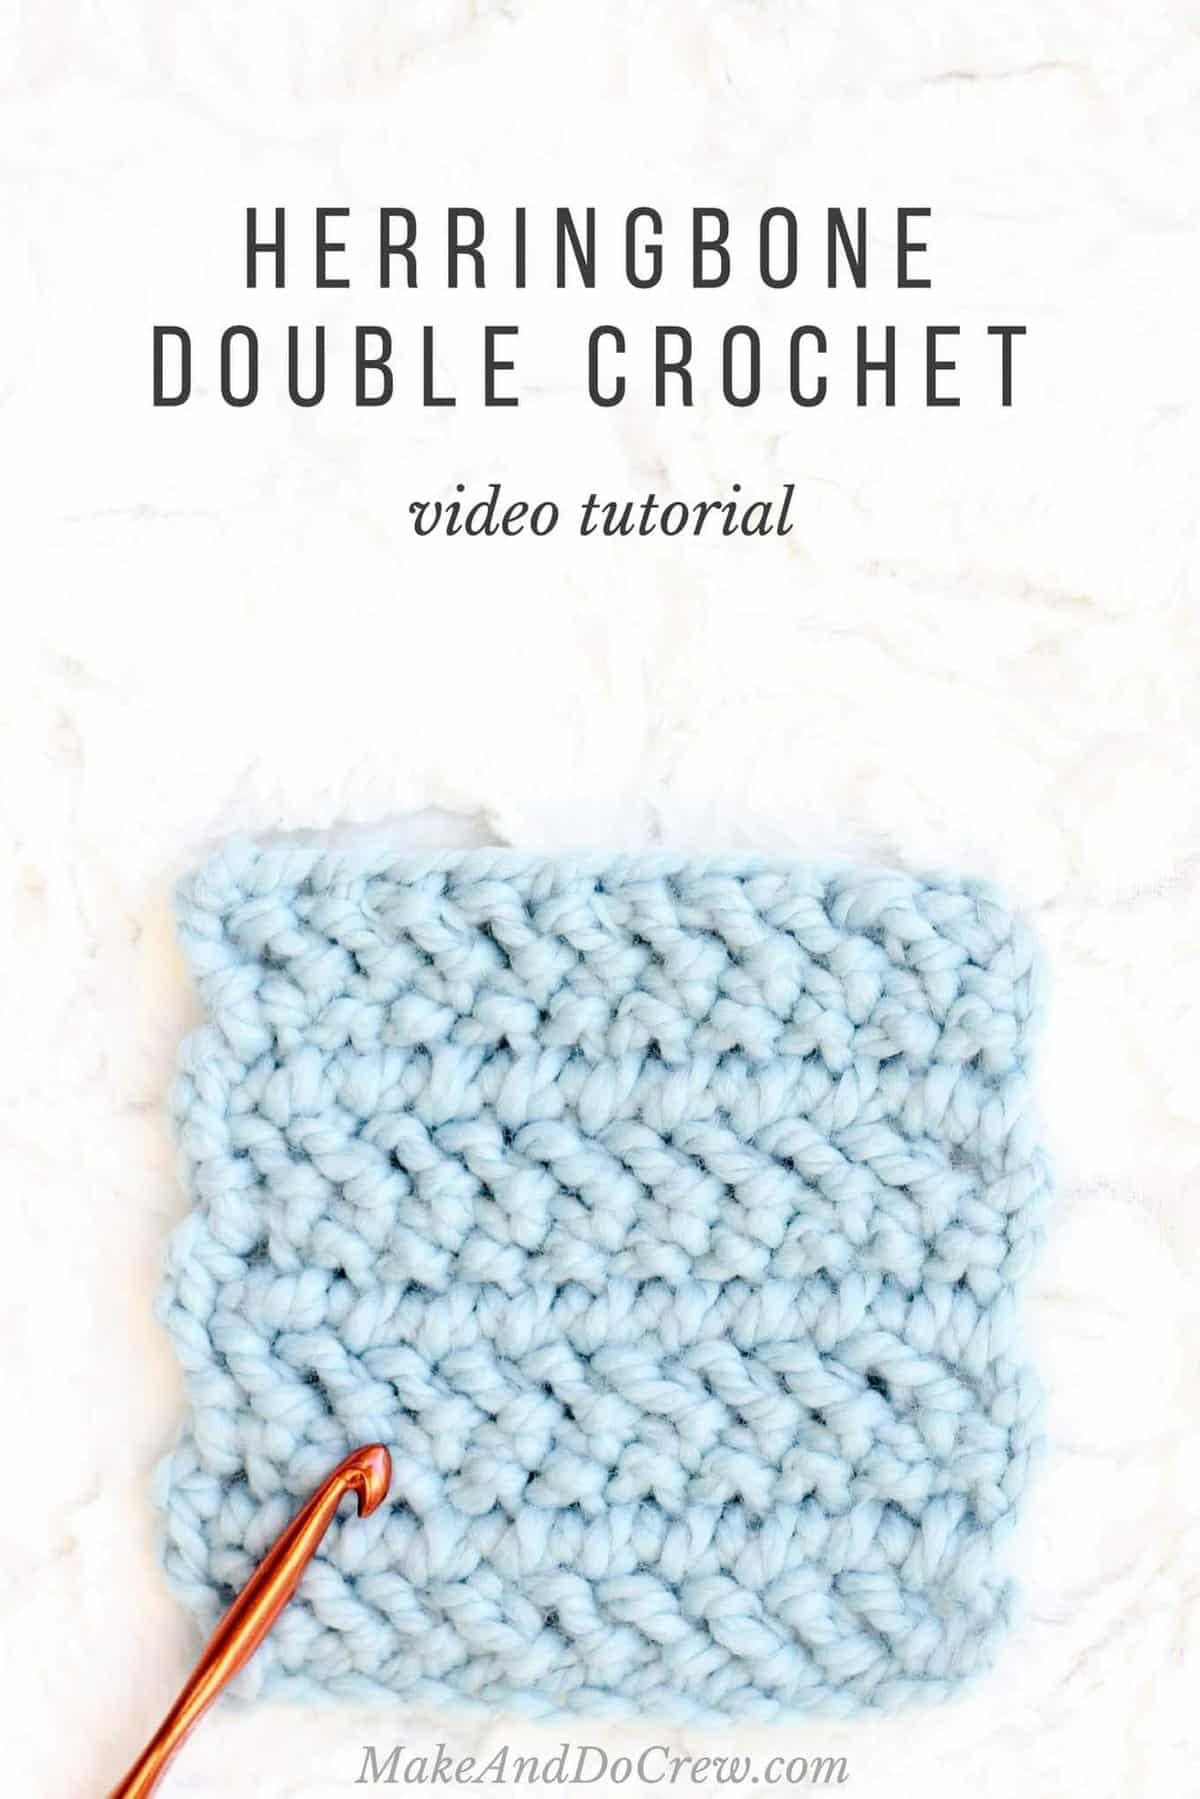 A swatch of the herringbone double crochet stitch.